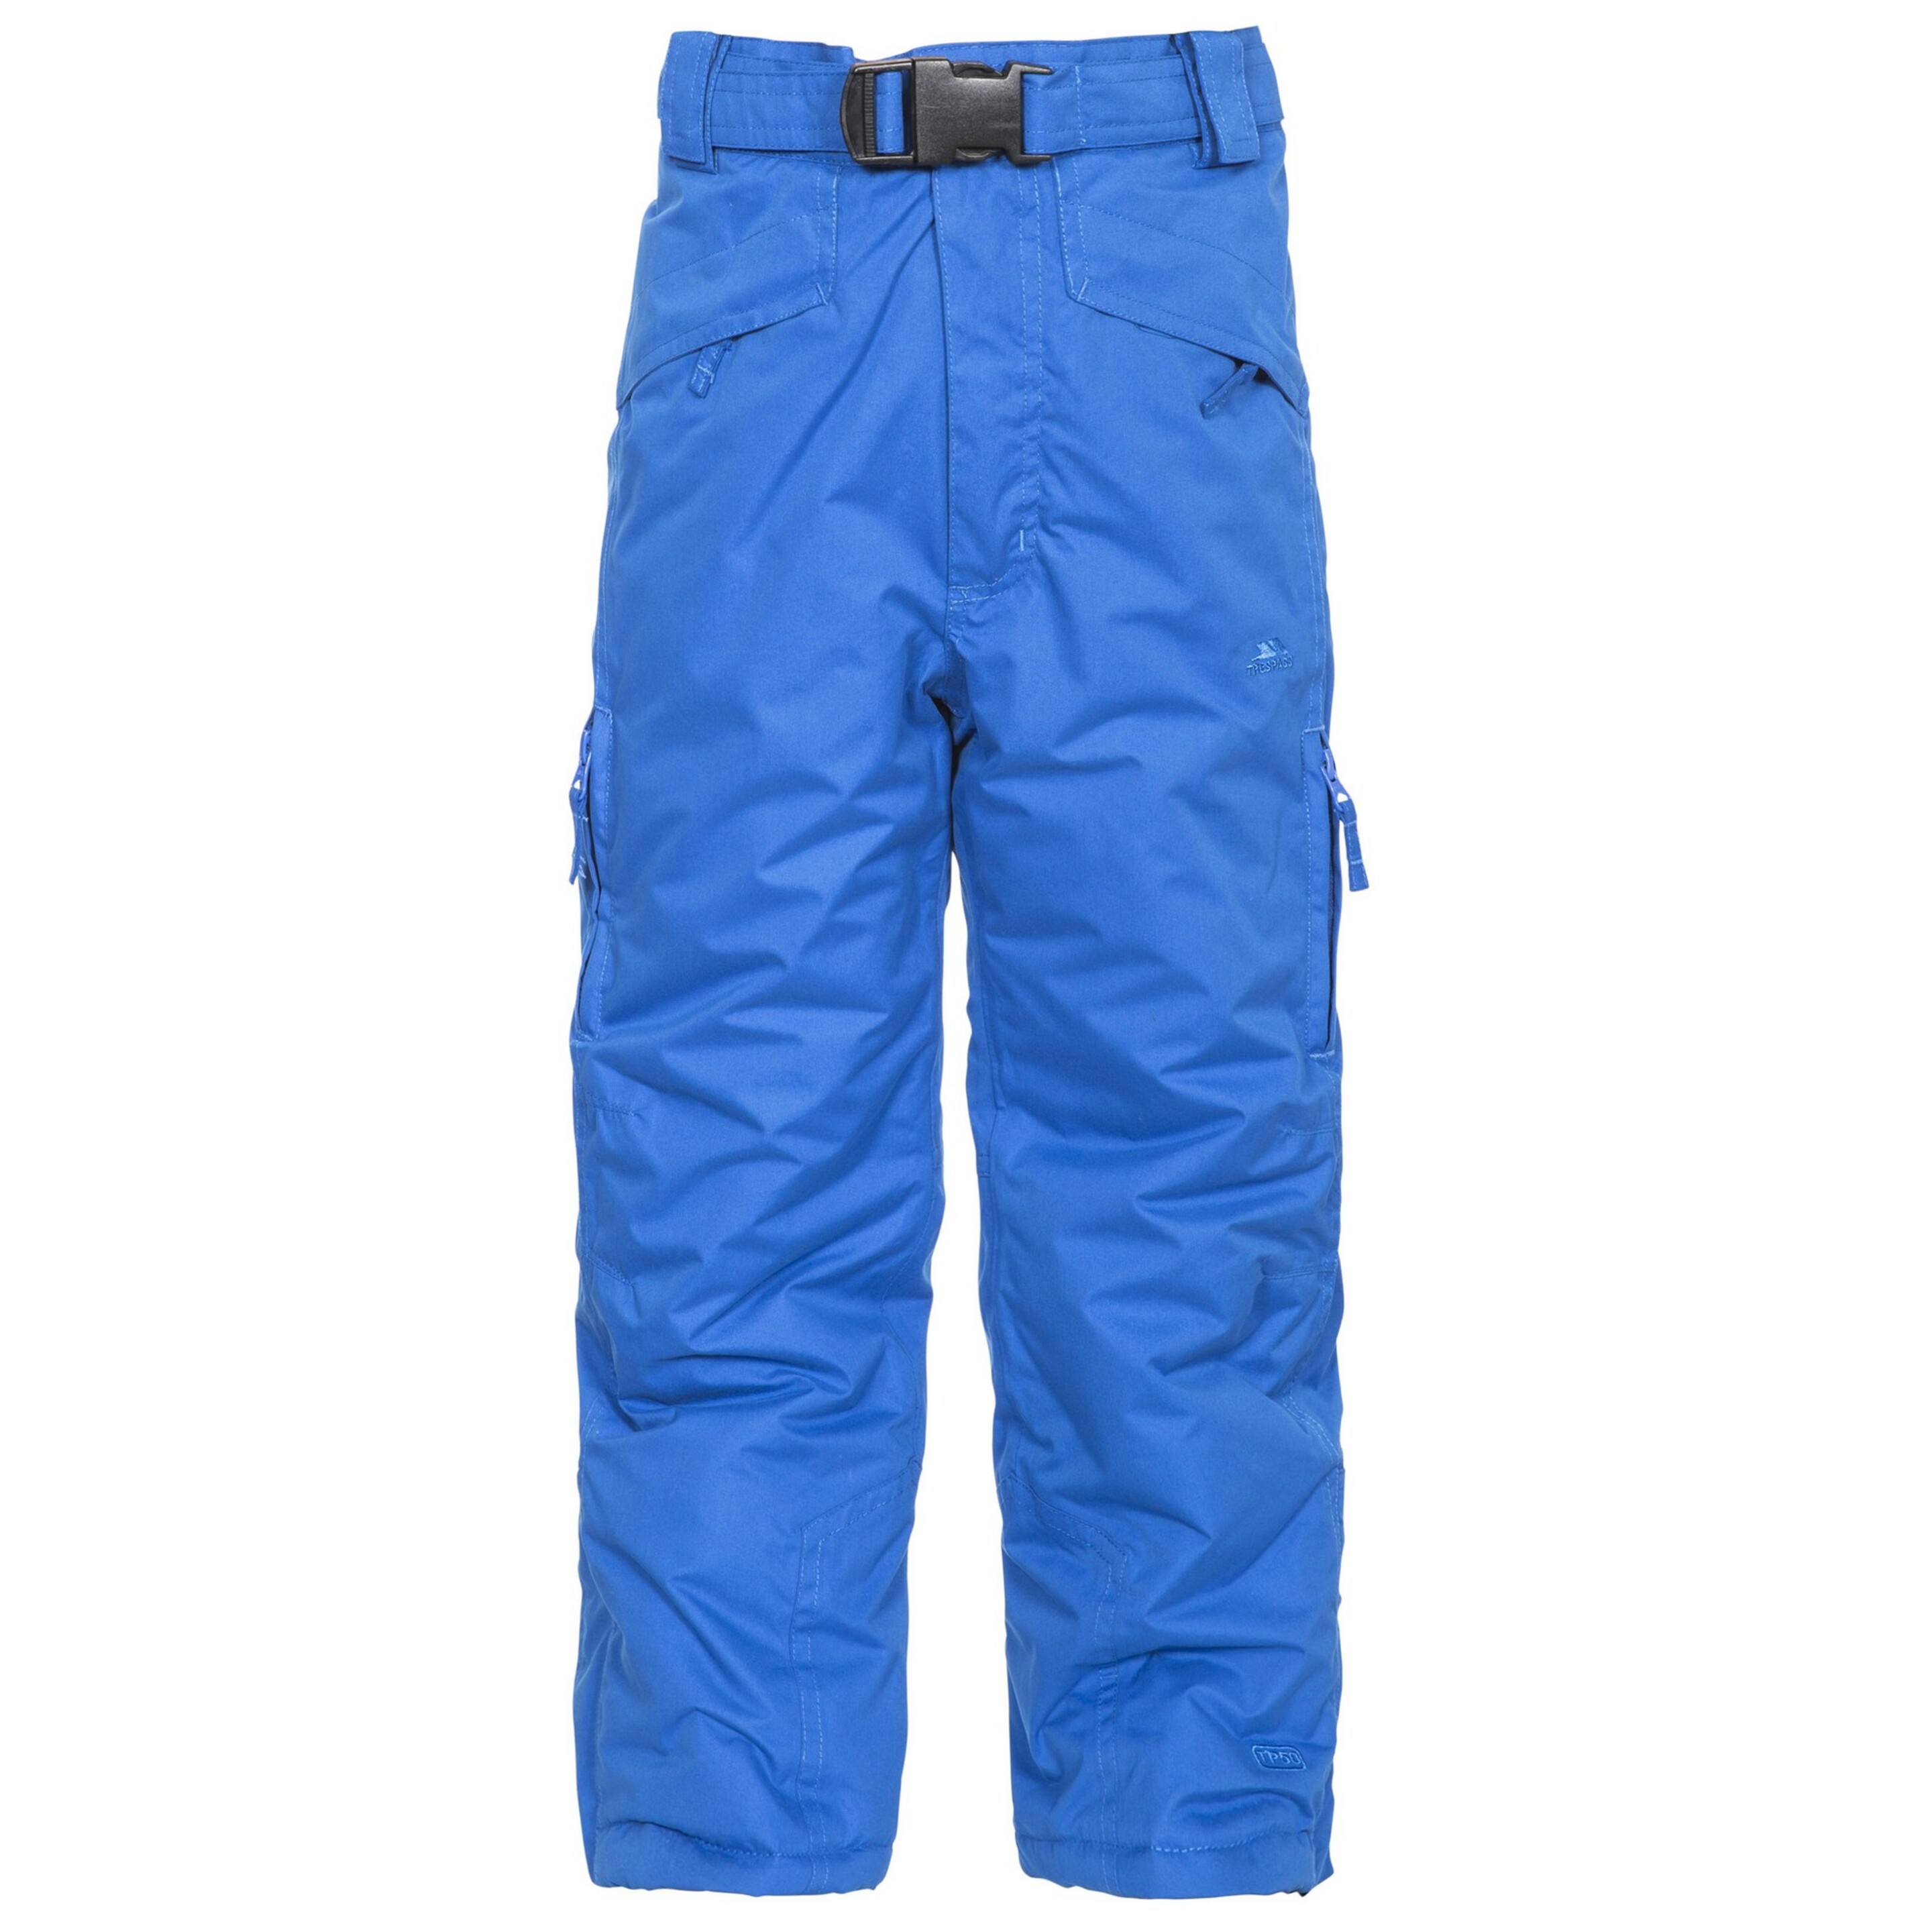 Pantalones De Esquí Impermeables Acolchados Con Tirantes Desmontables Trespass Marvelous - azul - 